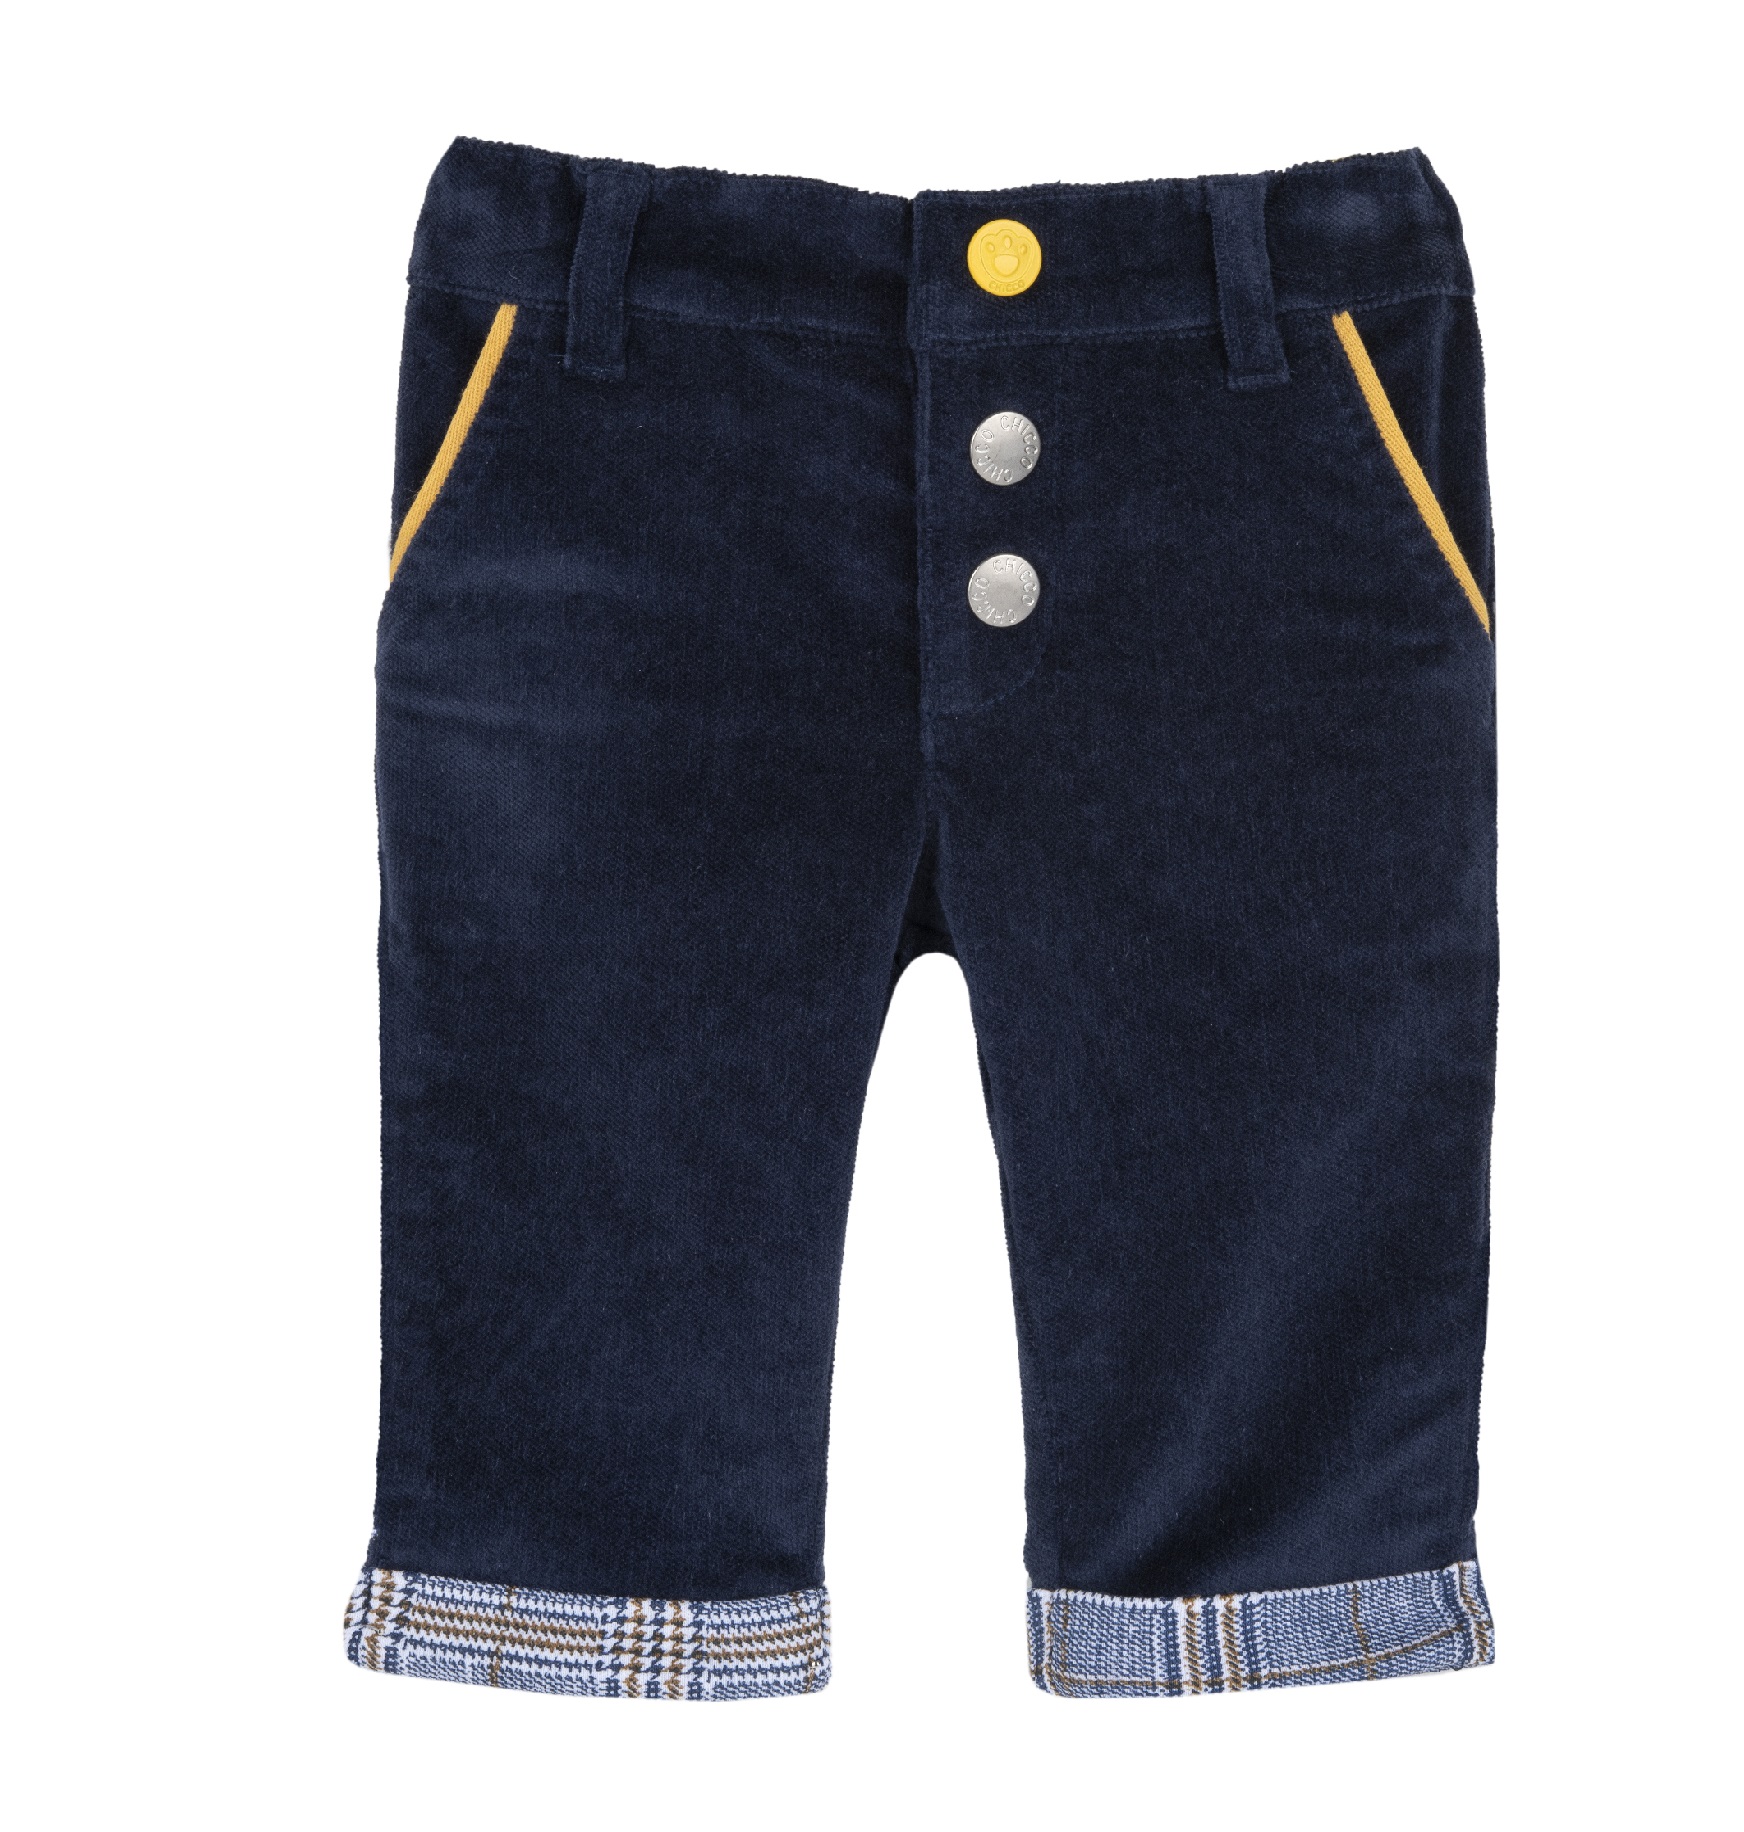 Pantaloni copii Chicco, albastru inchis, 08669-63MFCO 08669-63MFCO